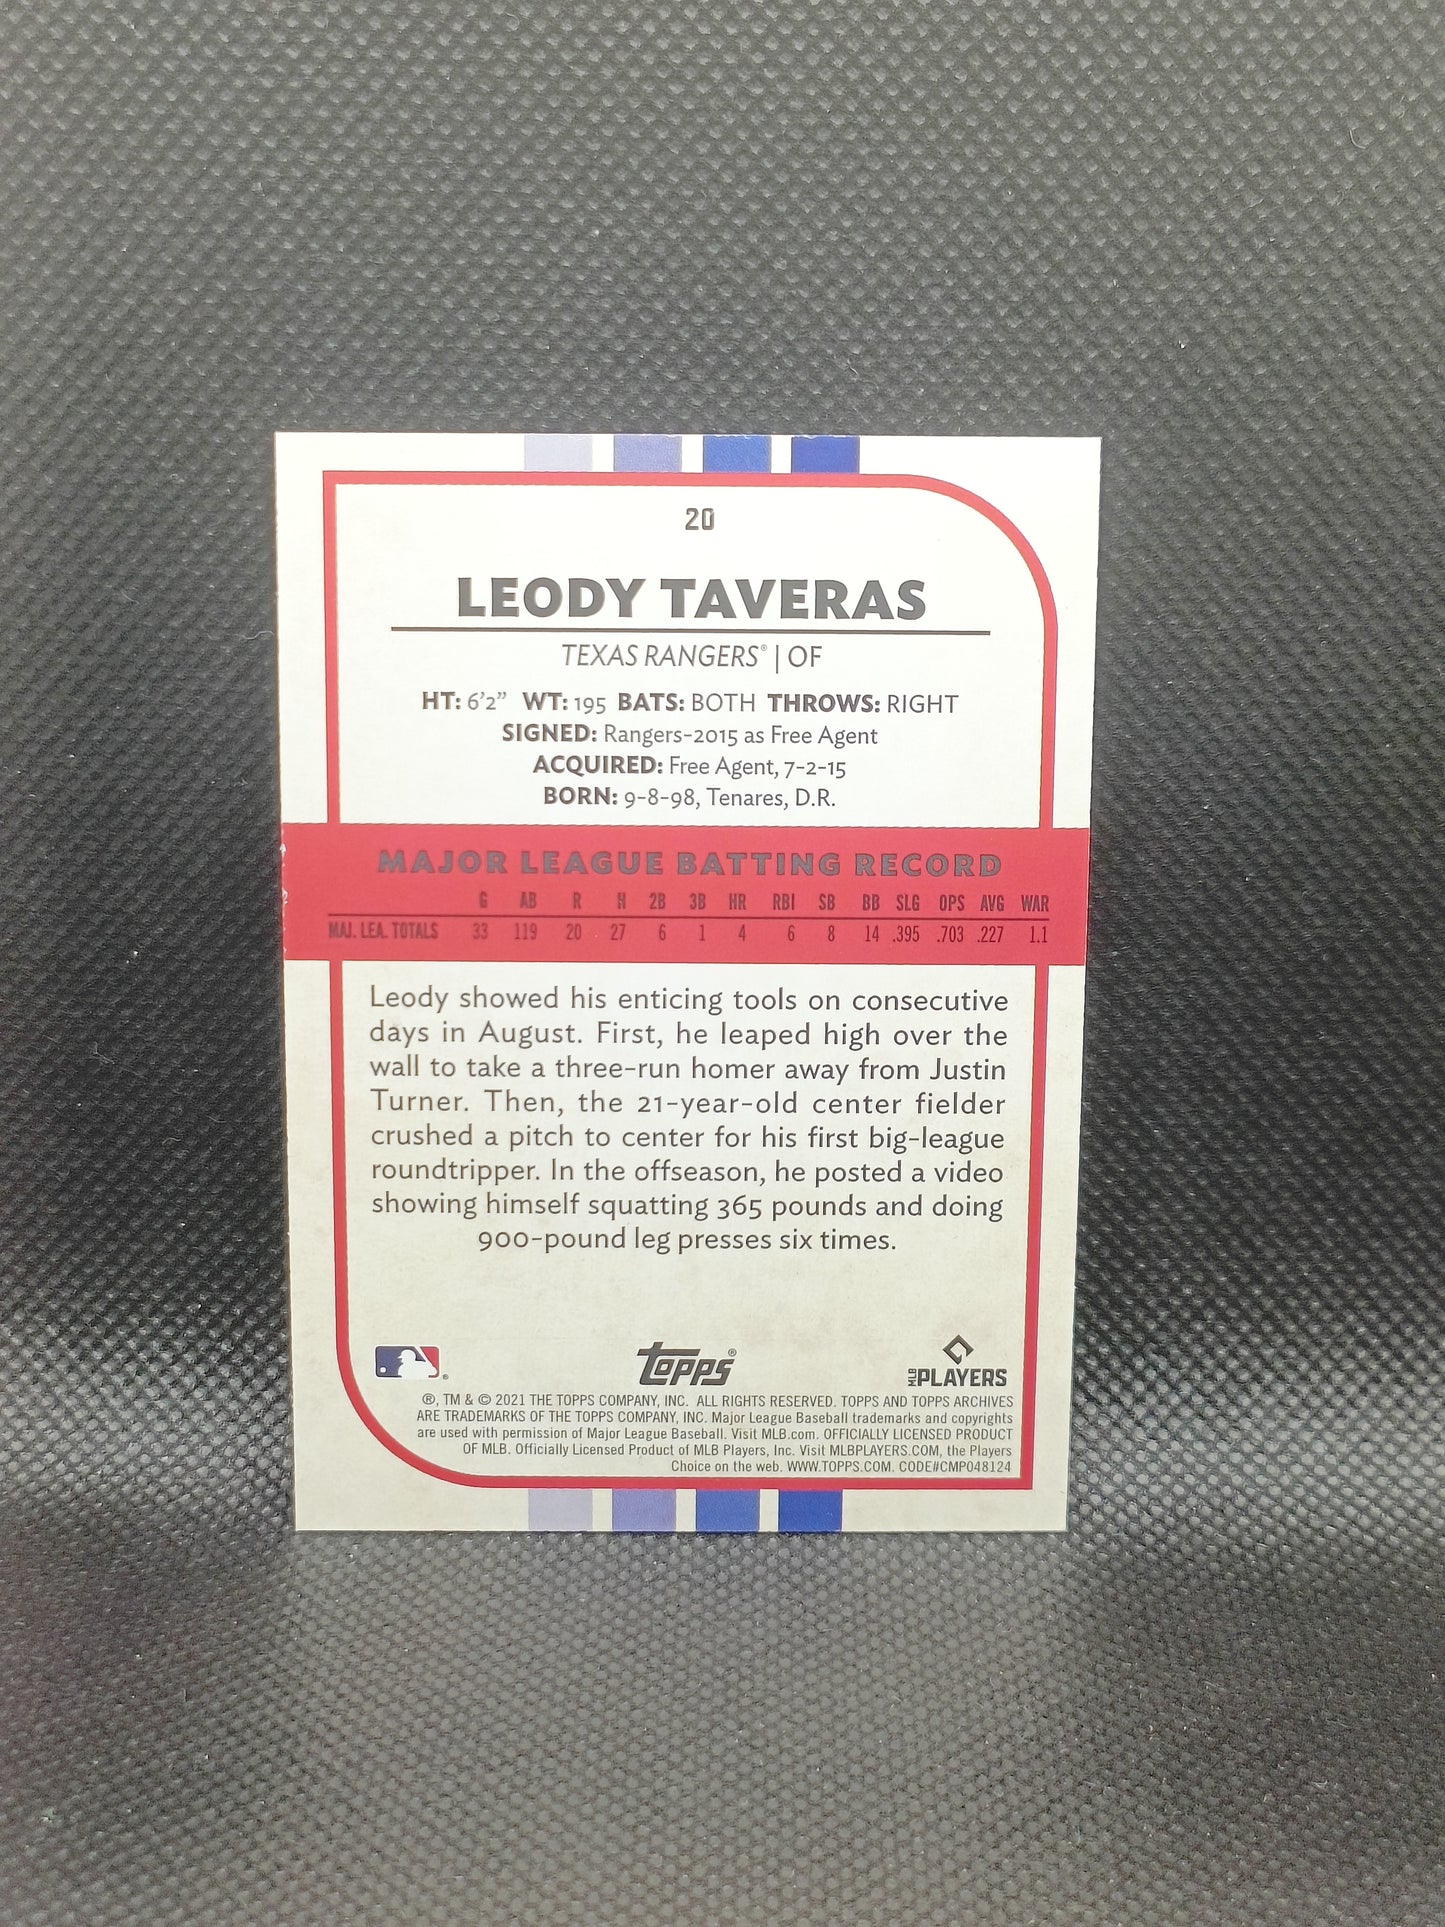 Leody Taveras - 2021 Topps Archives Snapshots Rookie Black & White - Texas Rangers